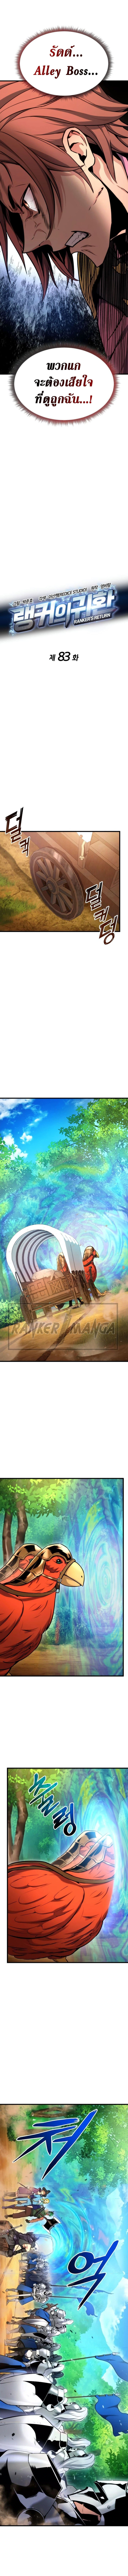 Ranker’s Return (Remake) 83 (6)